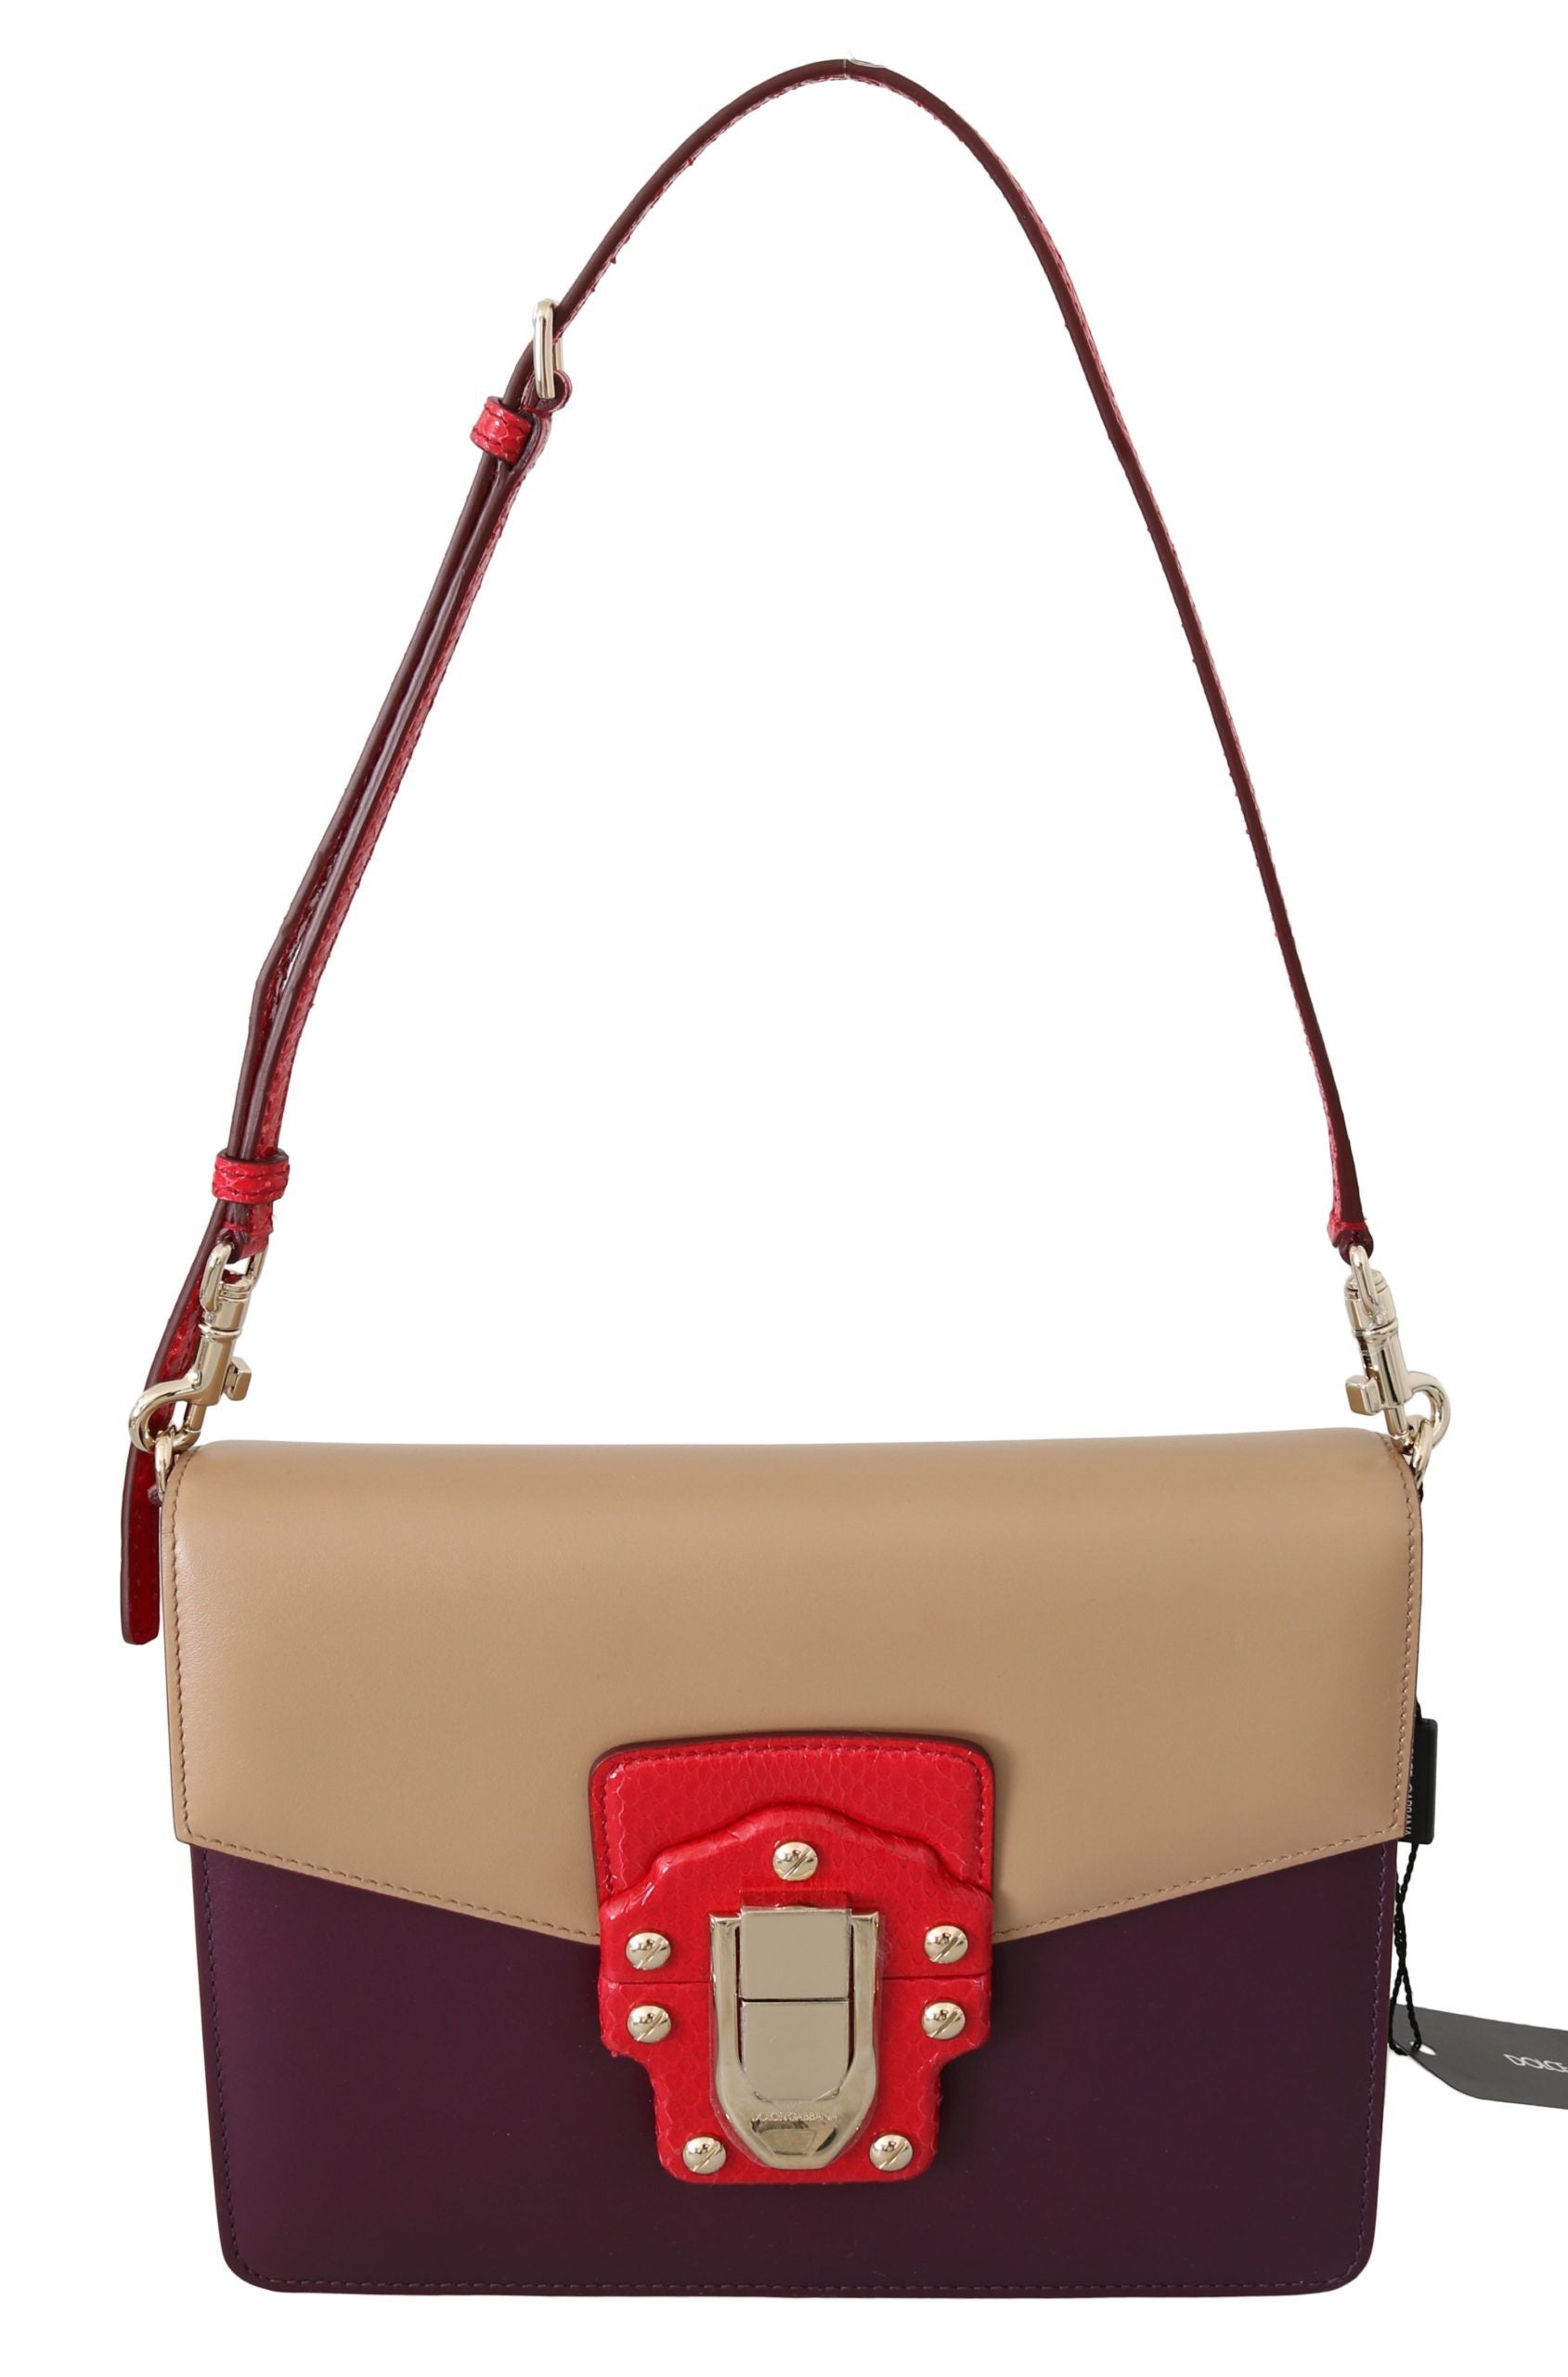 Exquisite LUCIA Leather Shoulder Bag